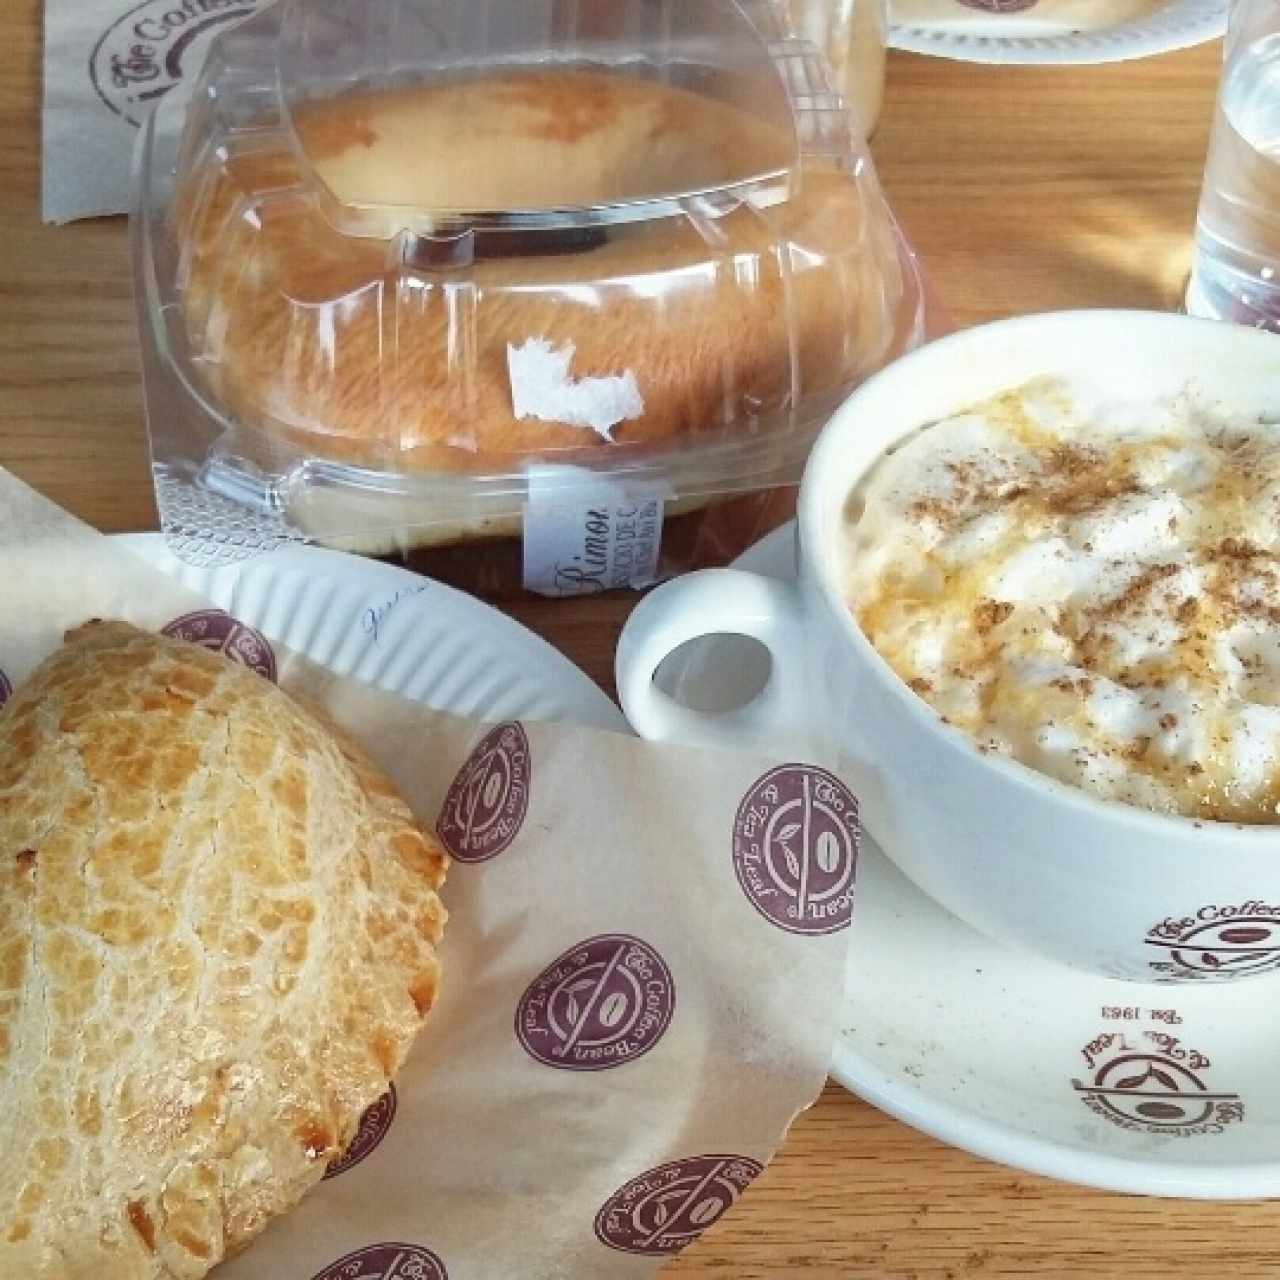 Emparedado de Salmón, Café con caramelo y Empanada de queso crema.